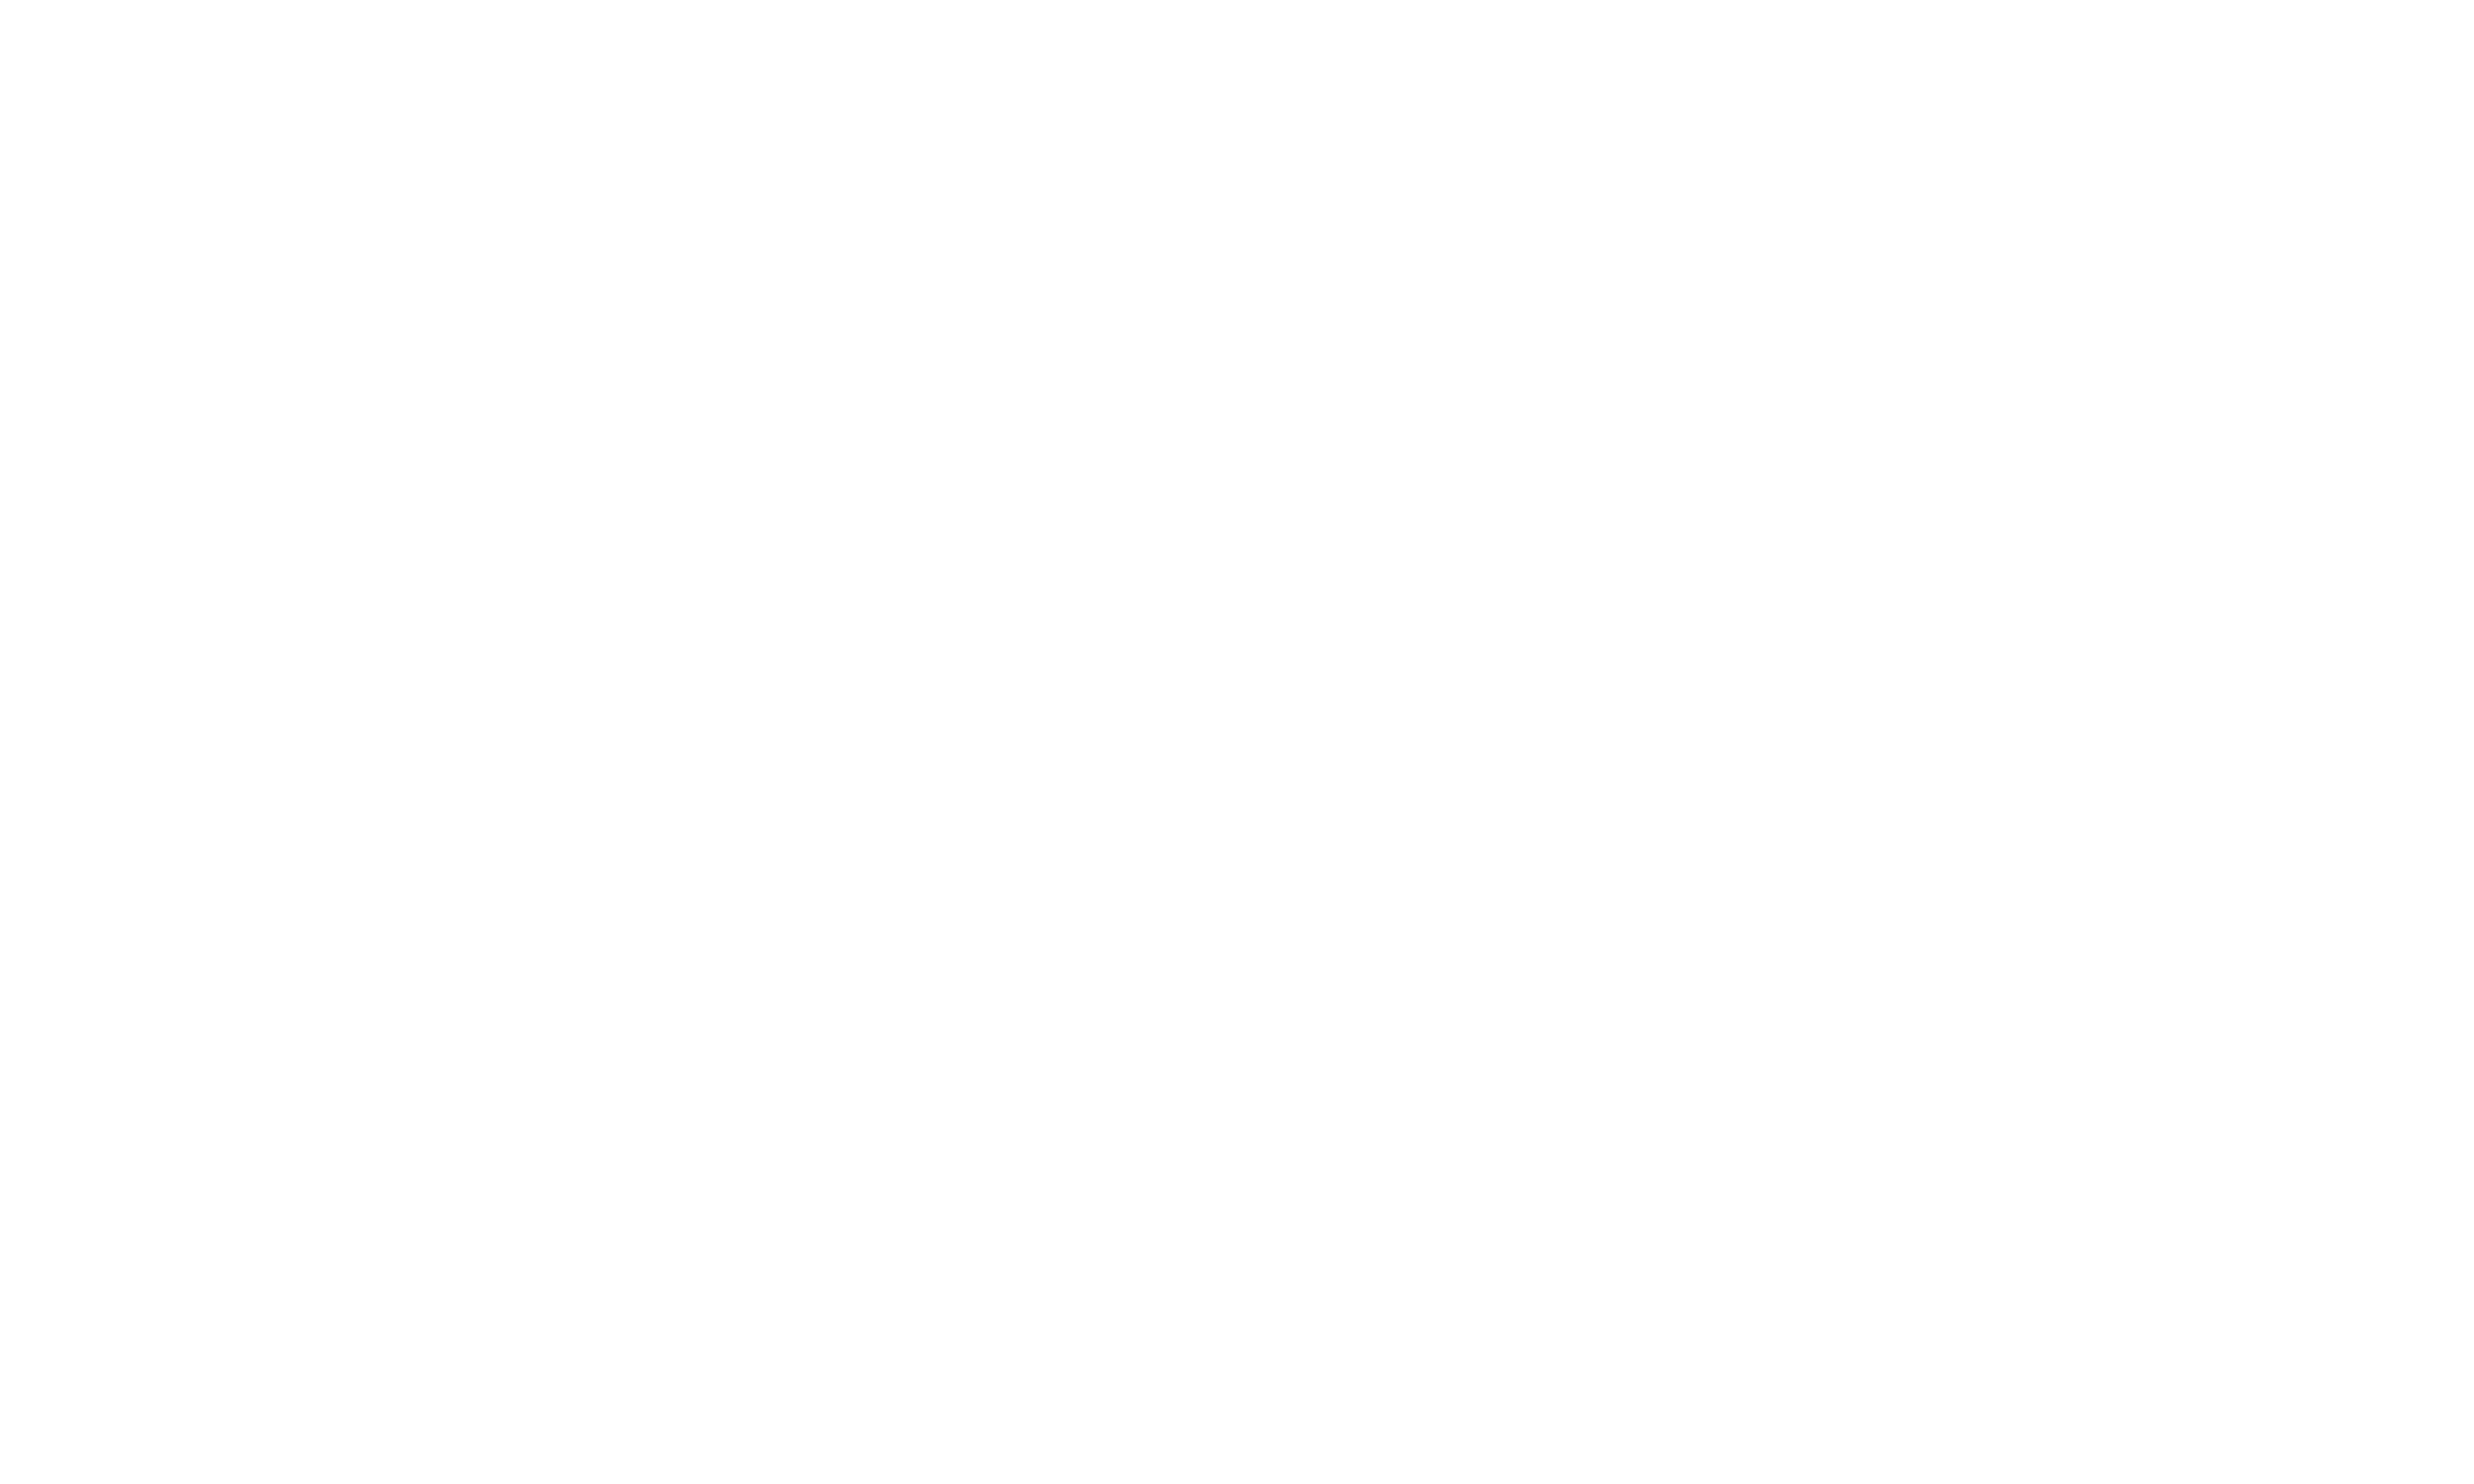 AMAZIGH WORLD NEWS